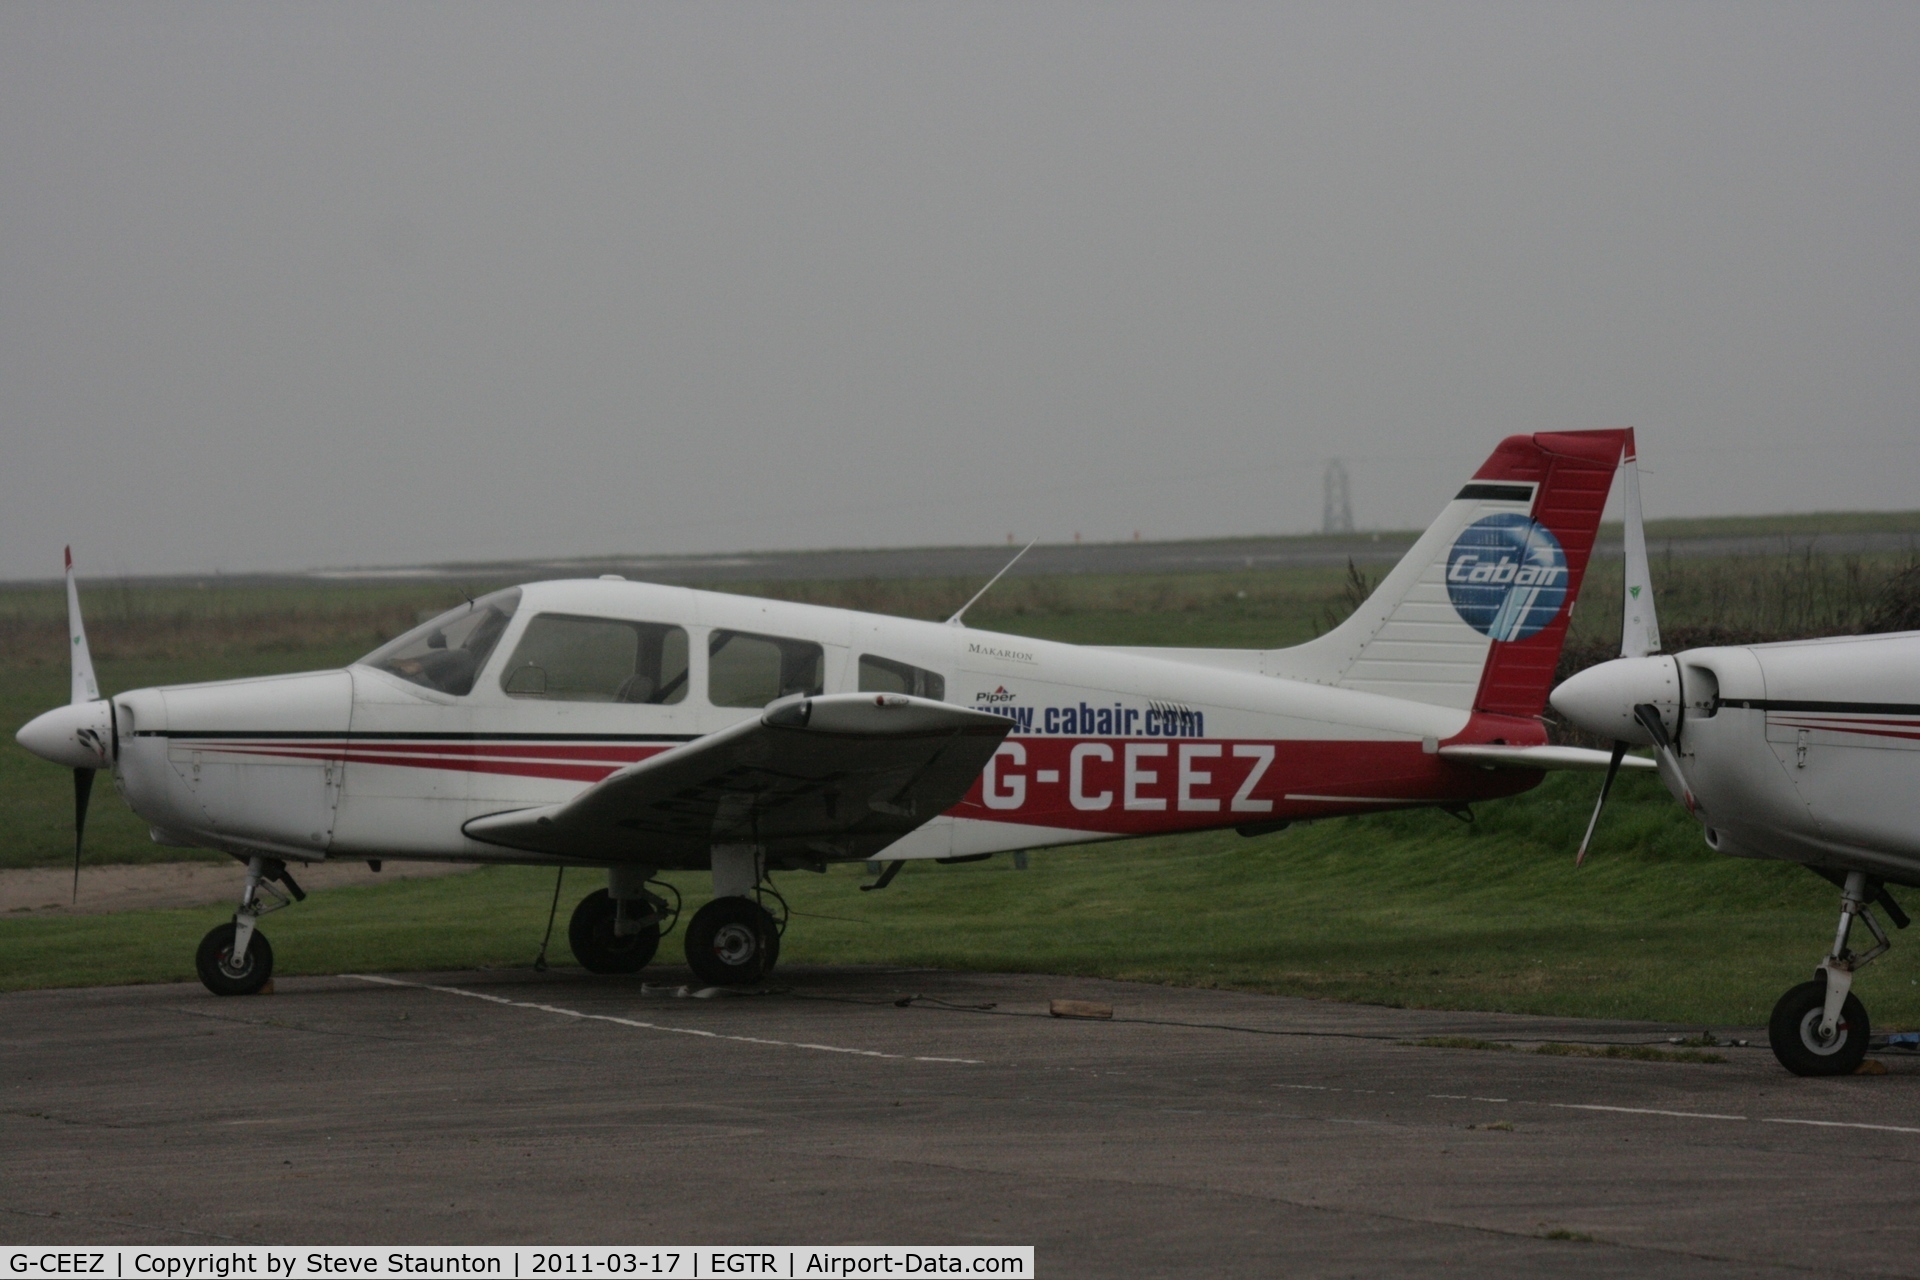 G-CEEZ, 2002 Piper PA-28-161 Warrior III C/N 2842161, Taken at Elstree Airfield March 2011